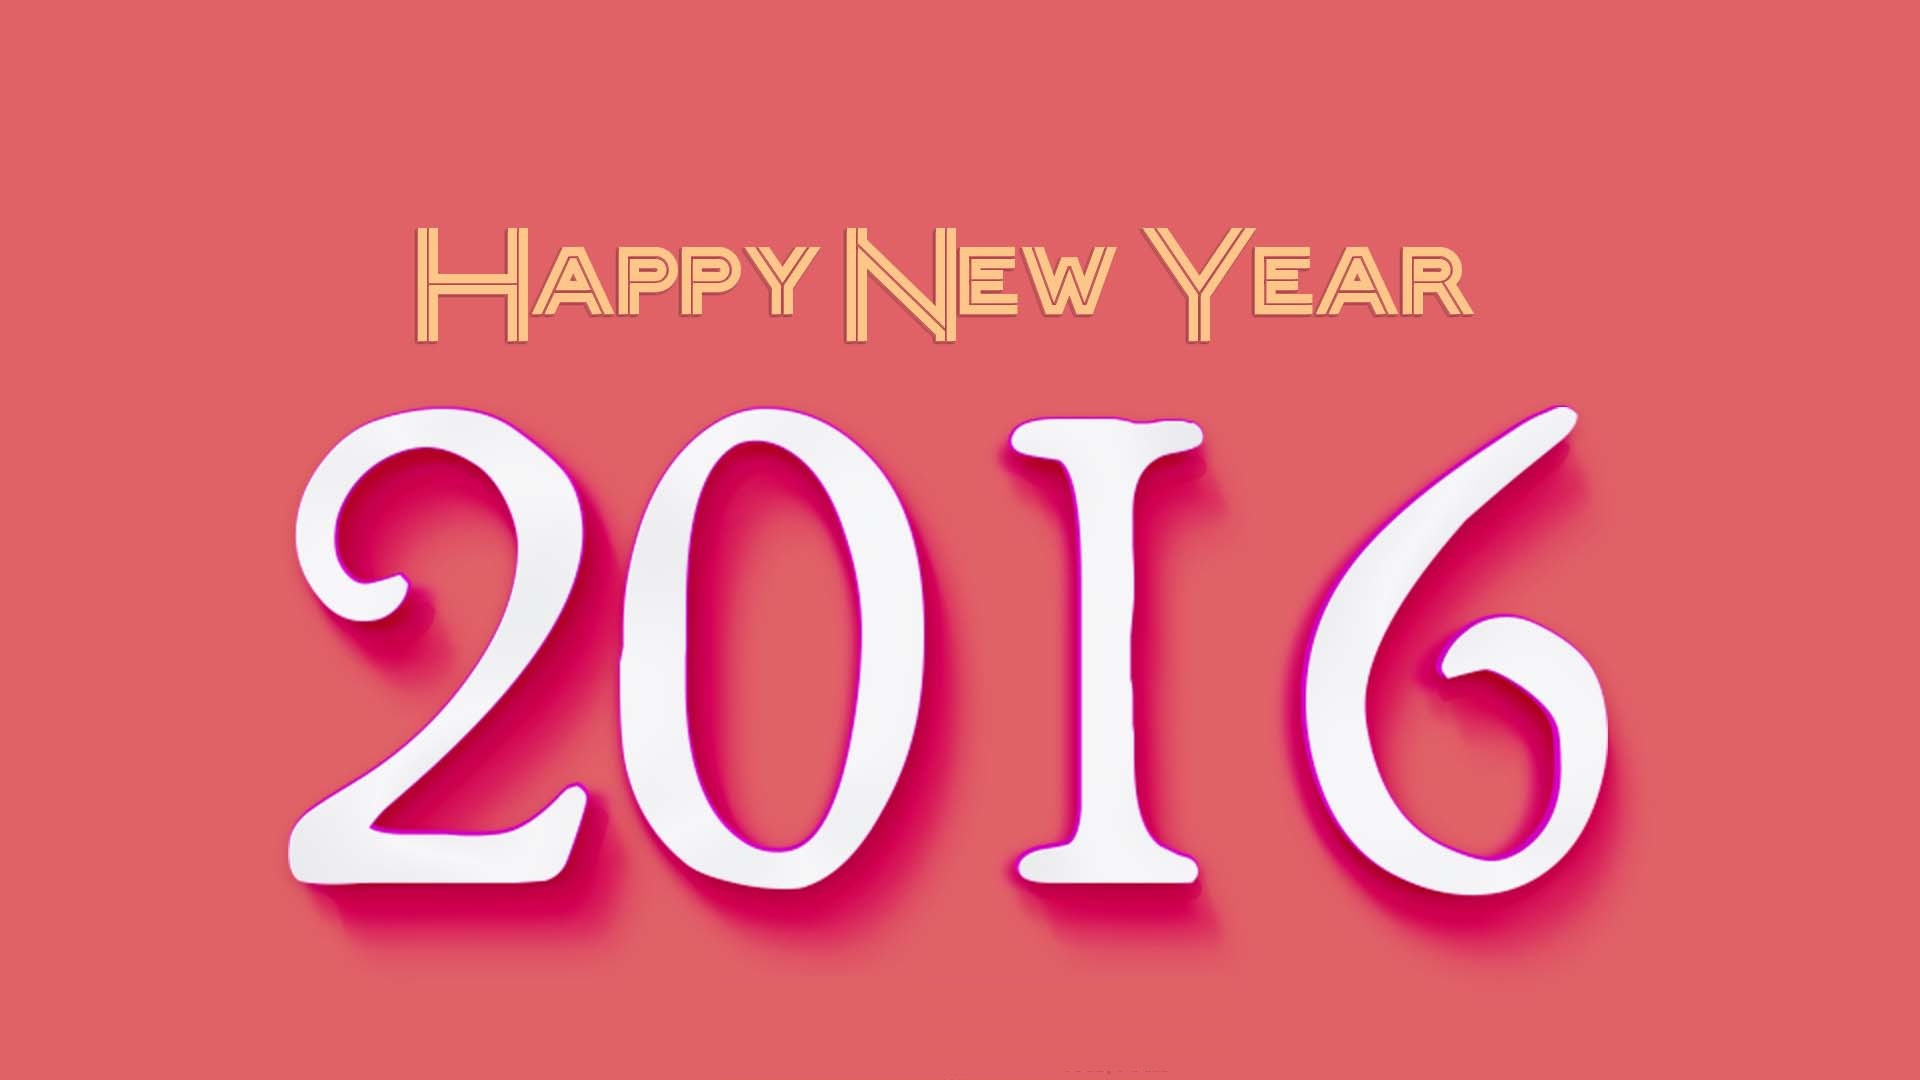 hinh-nen-happy-new-year-2016-1.jpg